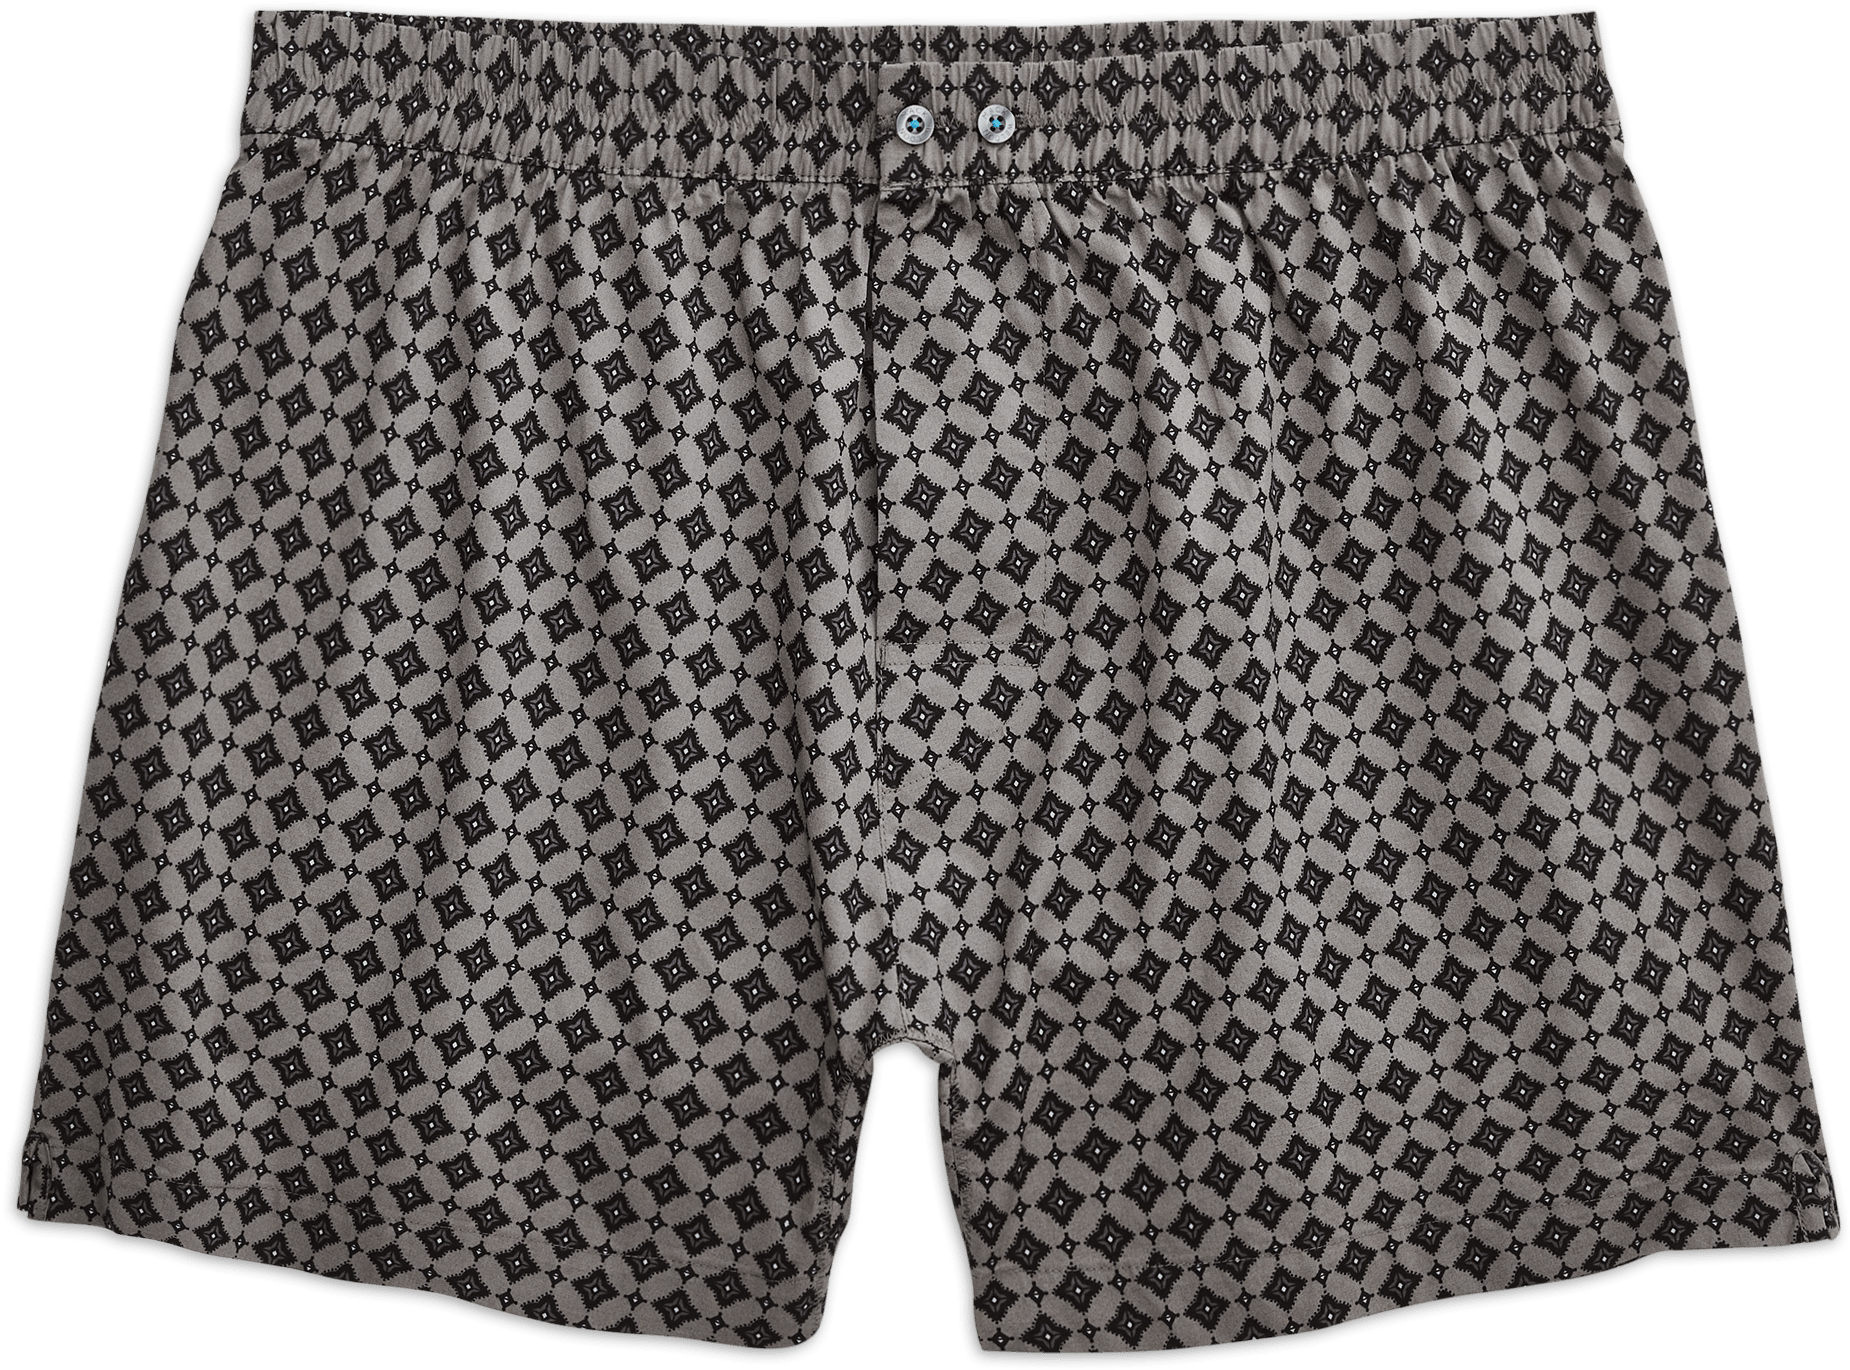 Patterned Boxer Shorts PNG image